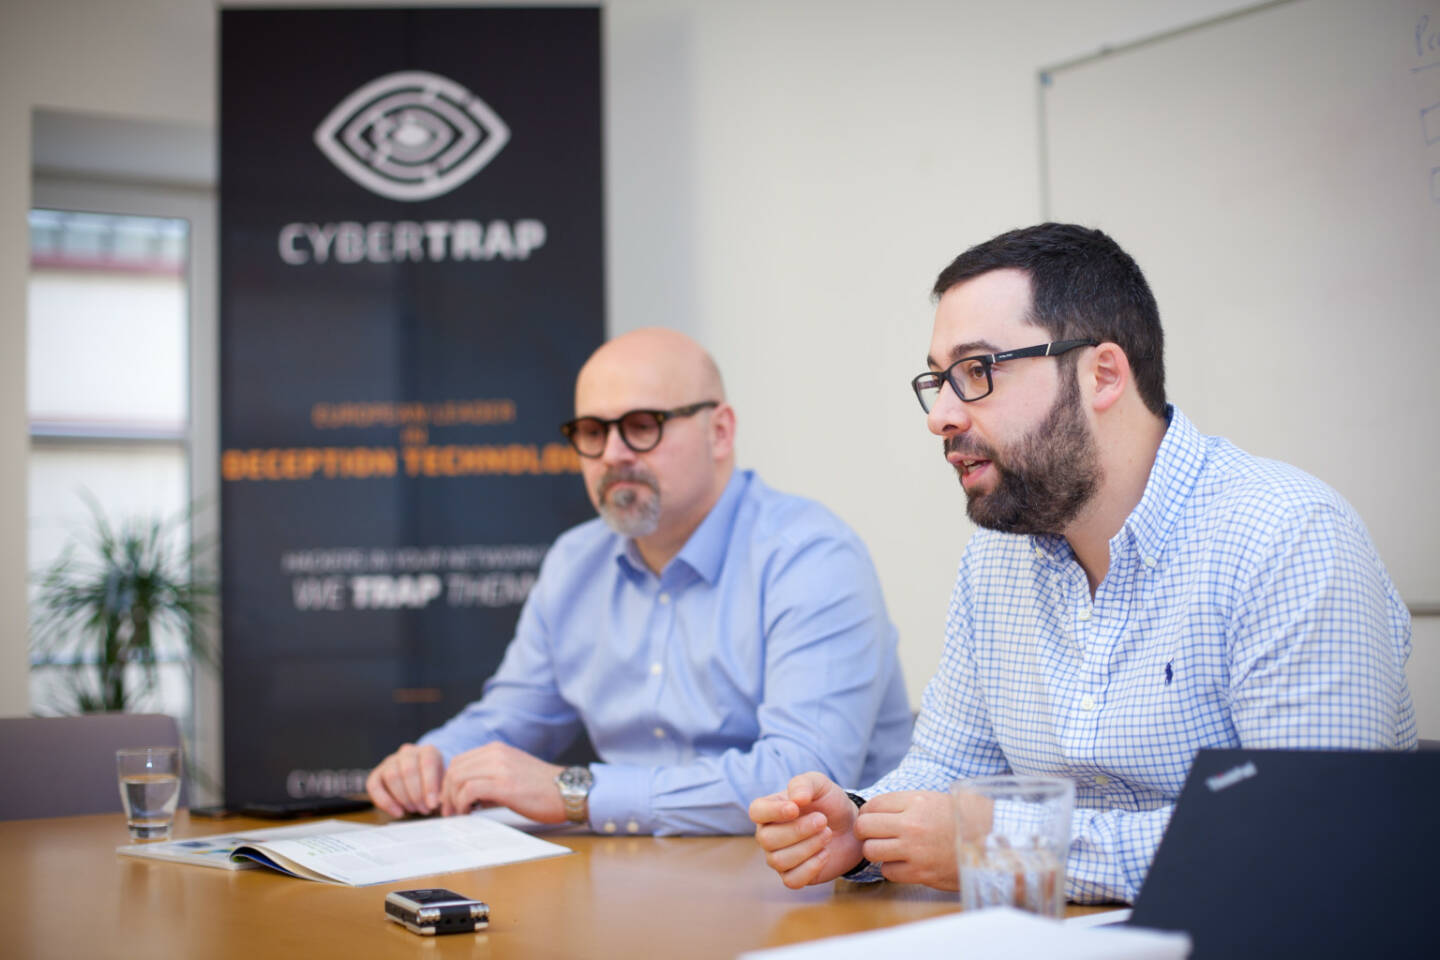 Jack Wagner, CEO CyberTrap GmbH, Avi Kravitz, CTO und Gründer CyberTrap GmbH, Foto: Michaela Mejta